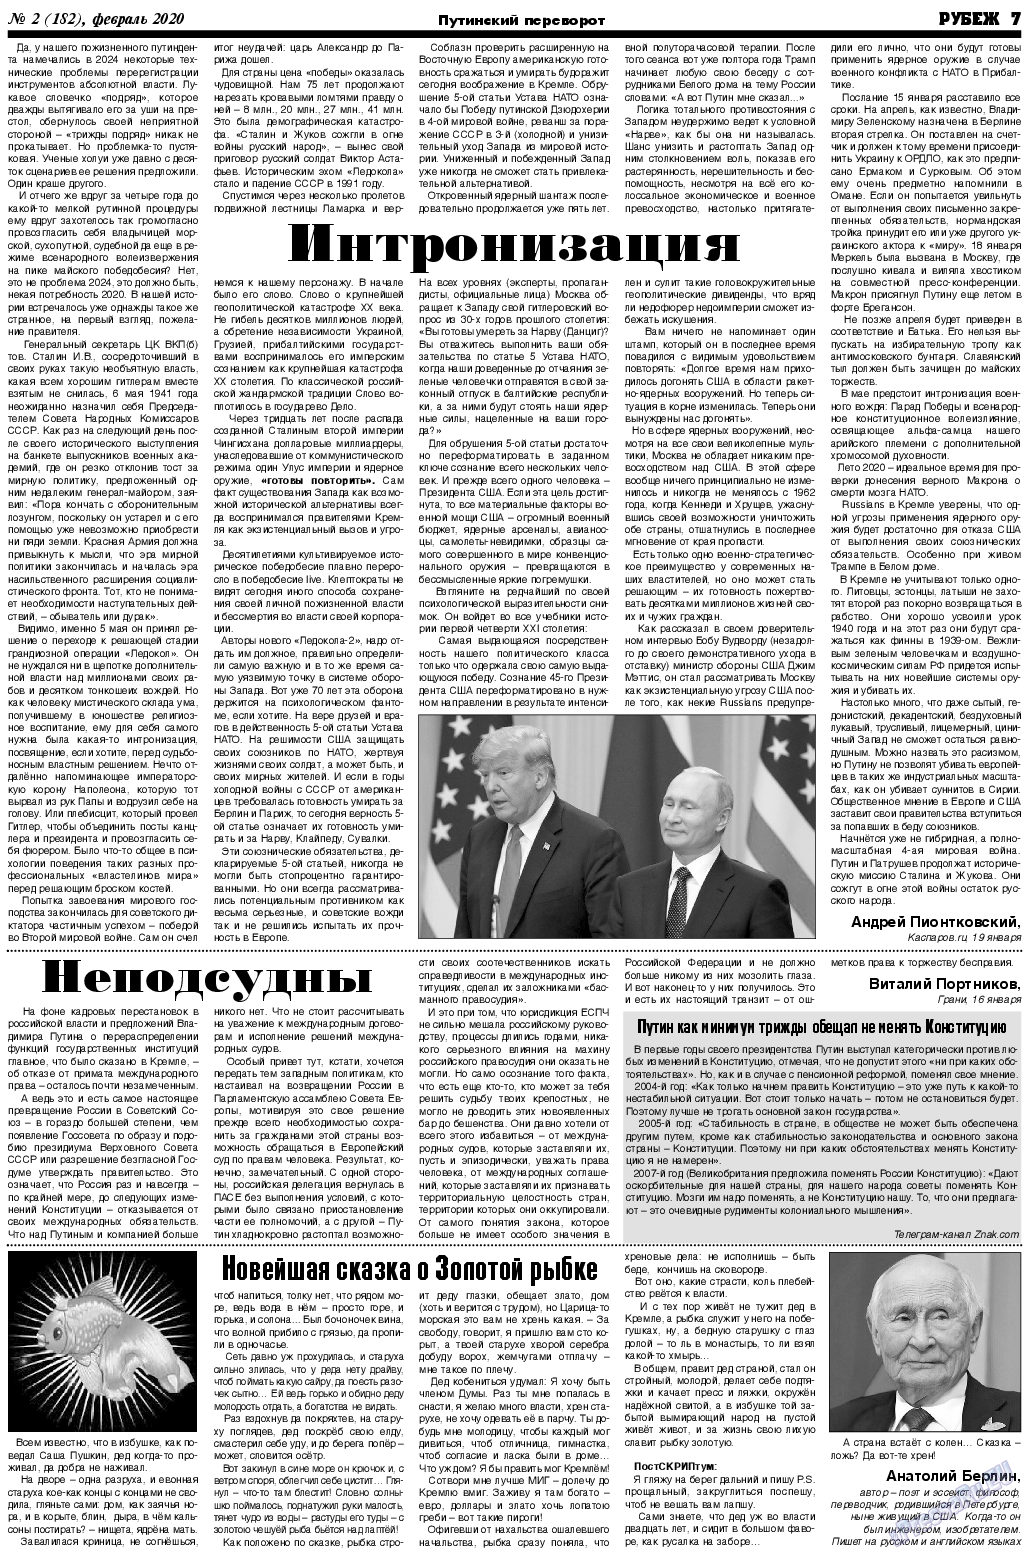 Рубеж, газета. 2020 №2 стр.7